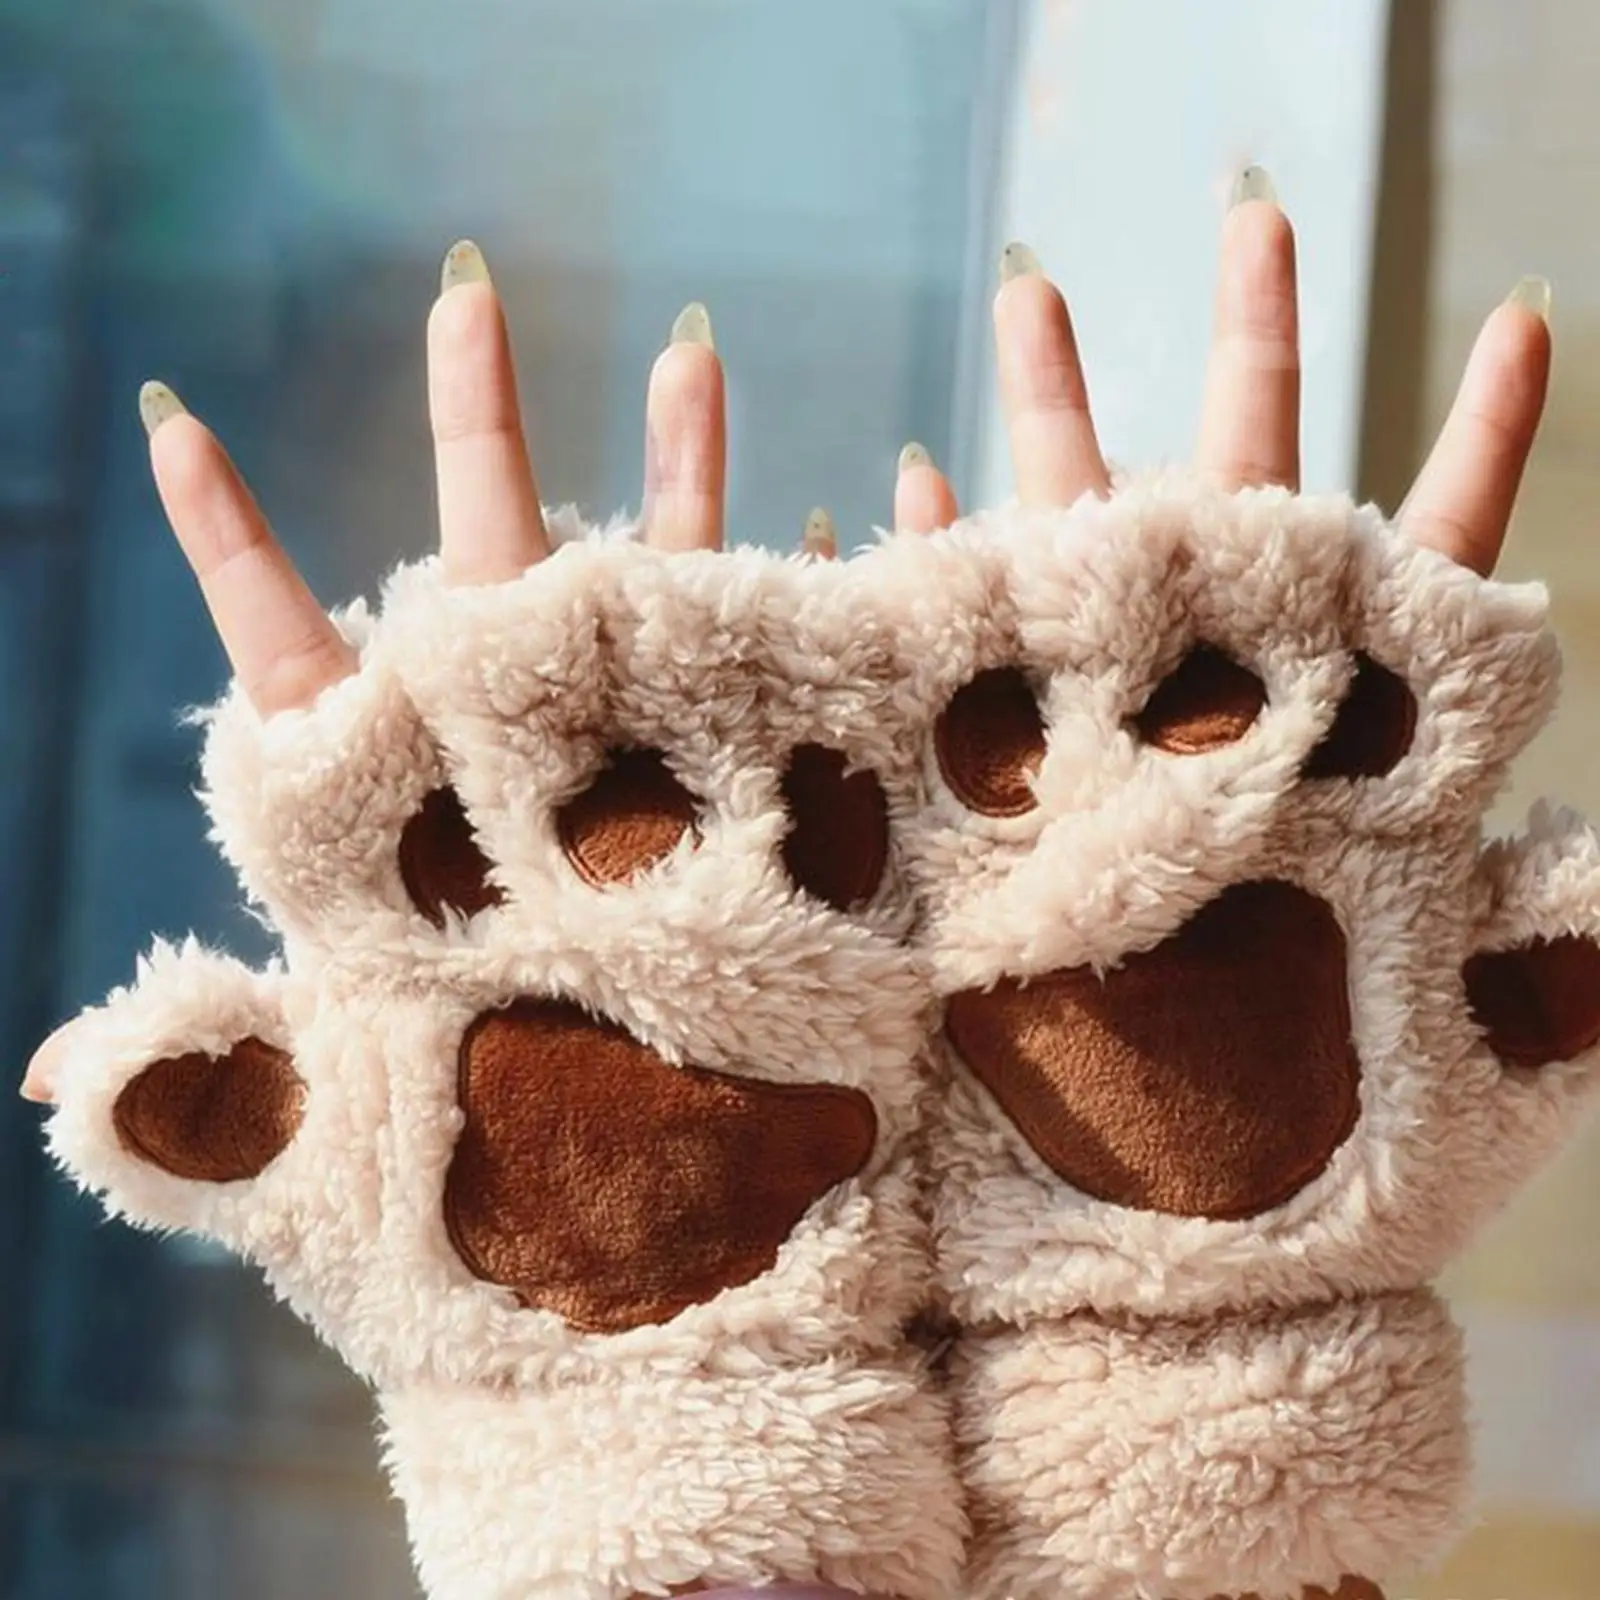 Cute Women Gloves Half Finger Fingerless Gloves Warm Indoor Outdoor Winter Teens Girls Soft Mittens for Cosplay Costume